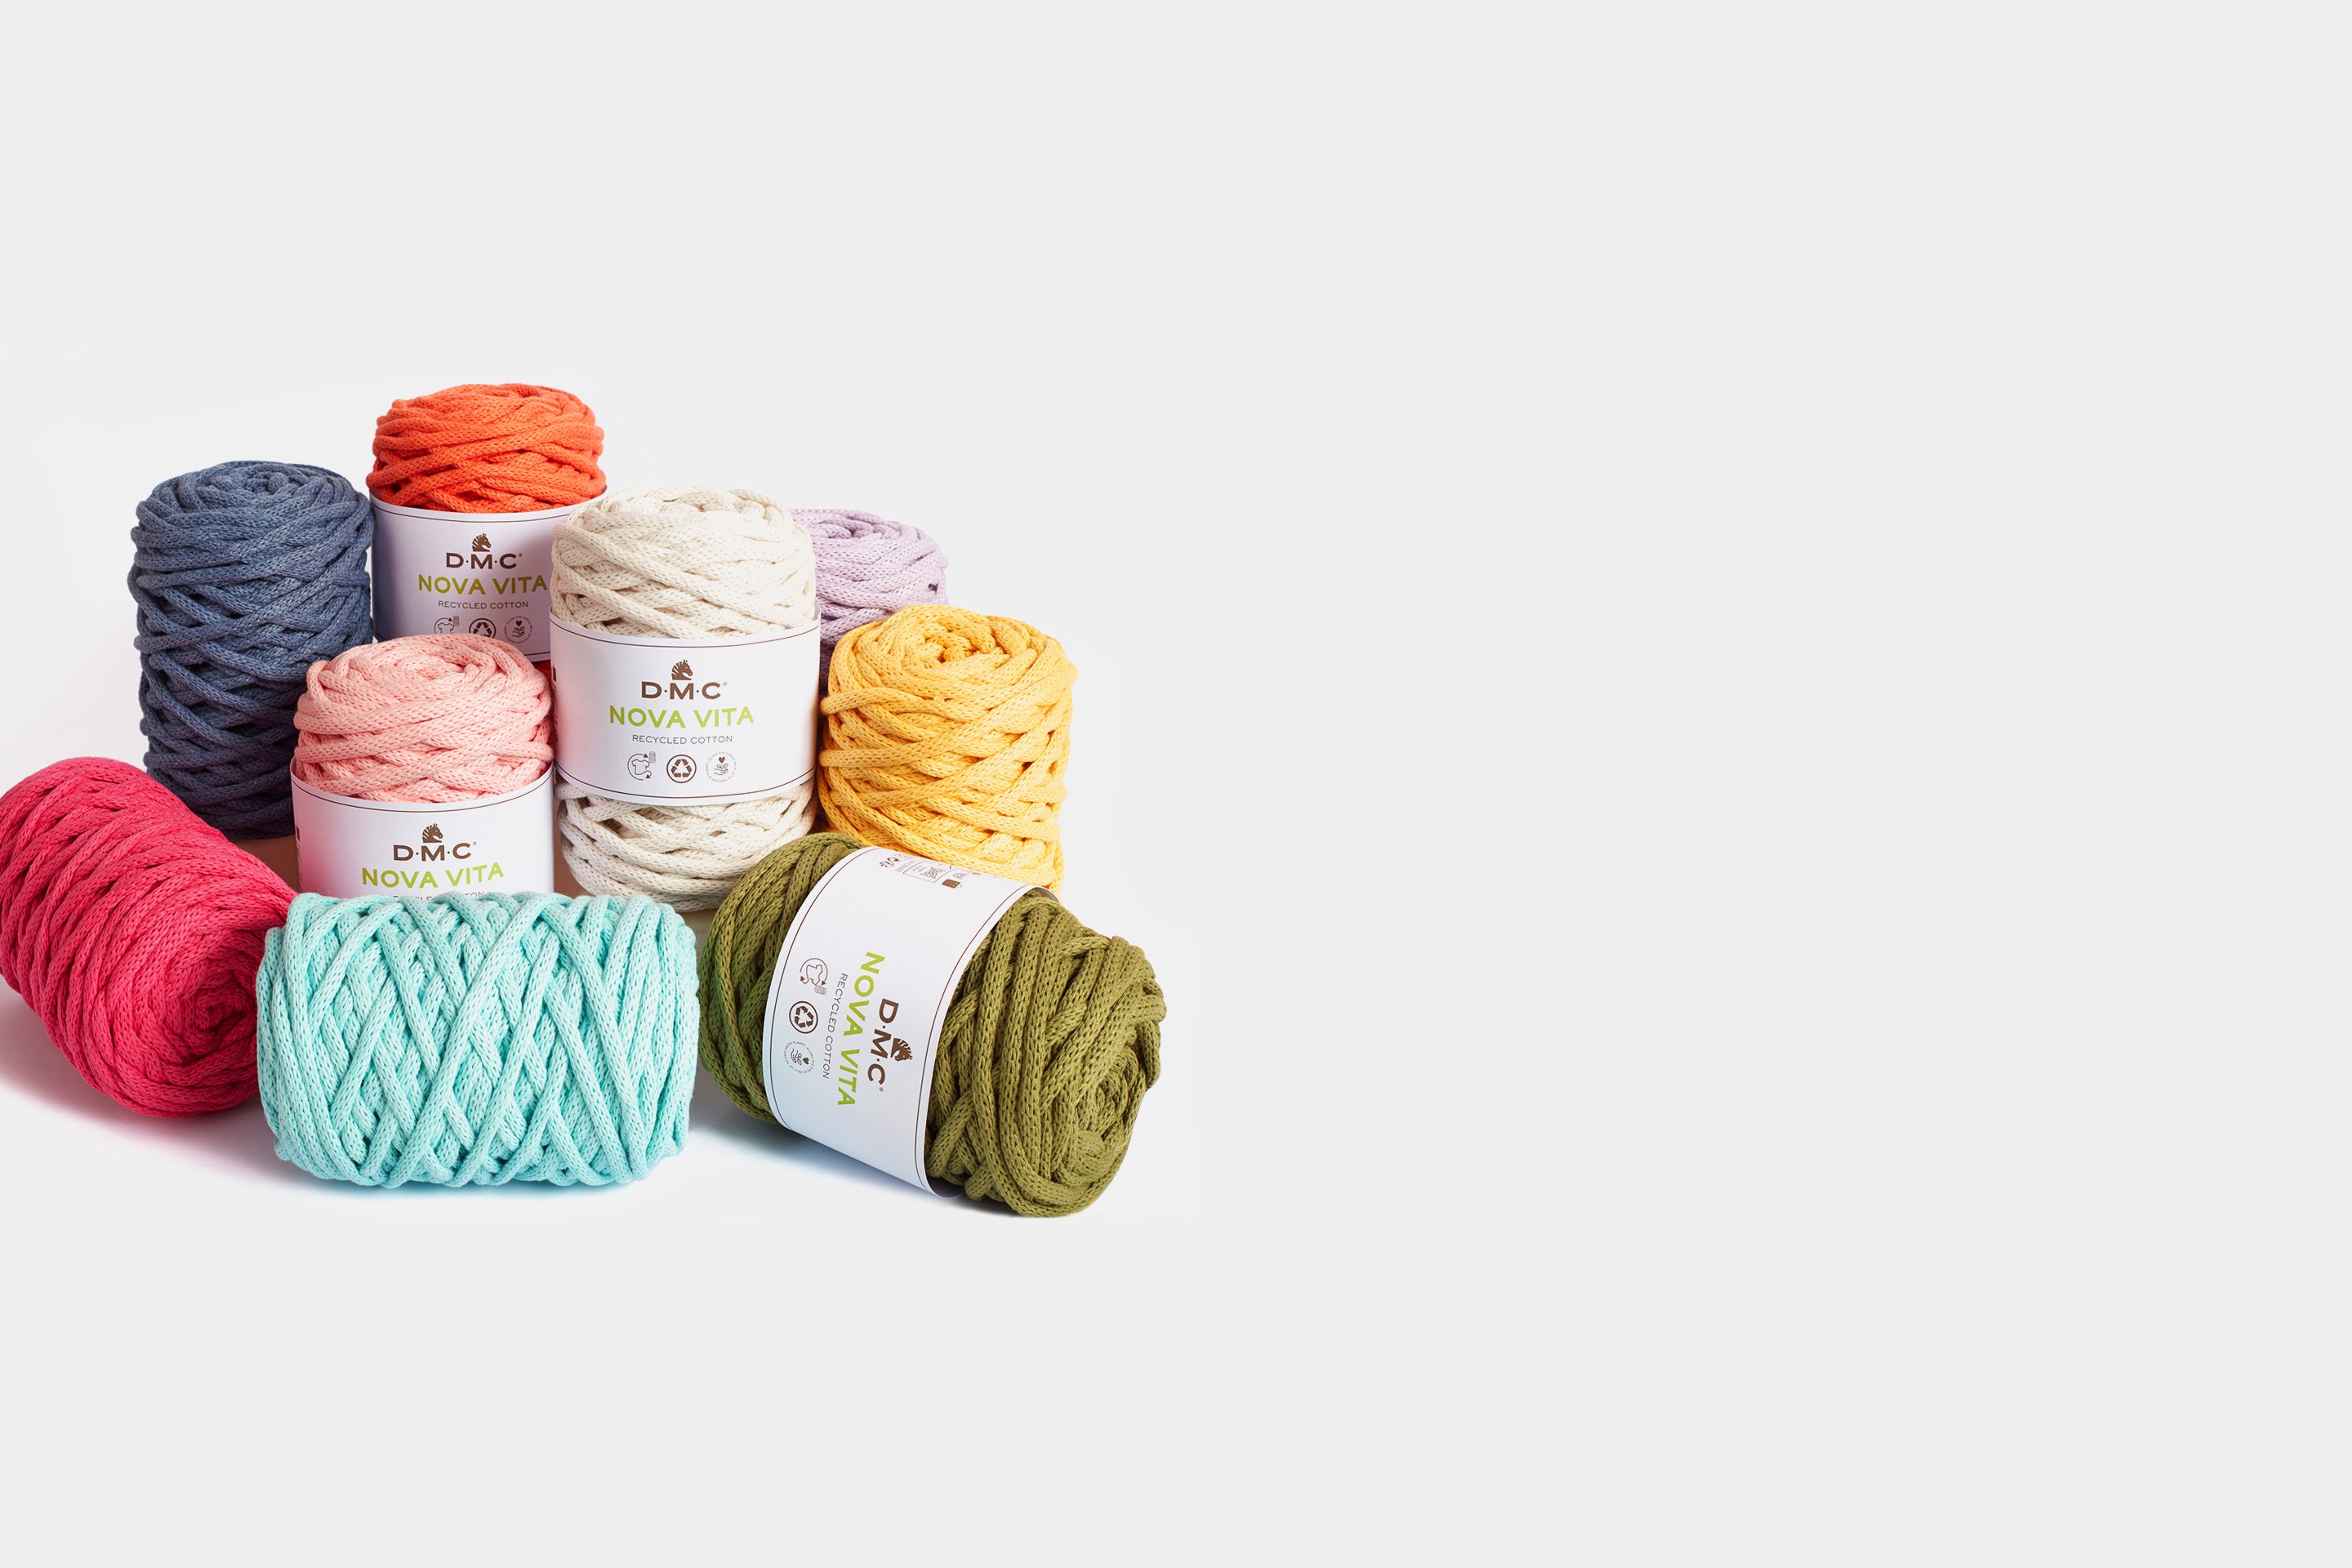 Nova Vita hilo para crochet, macramé y tricot